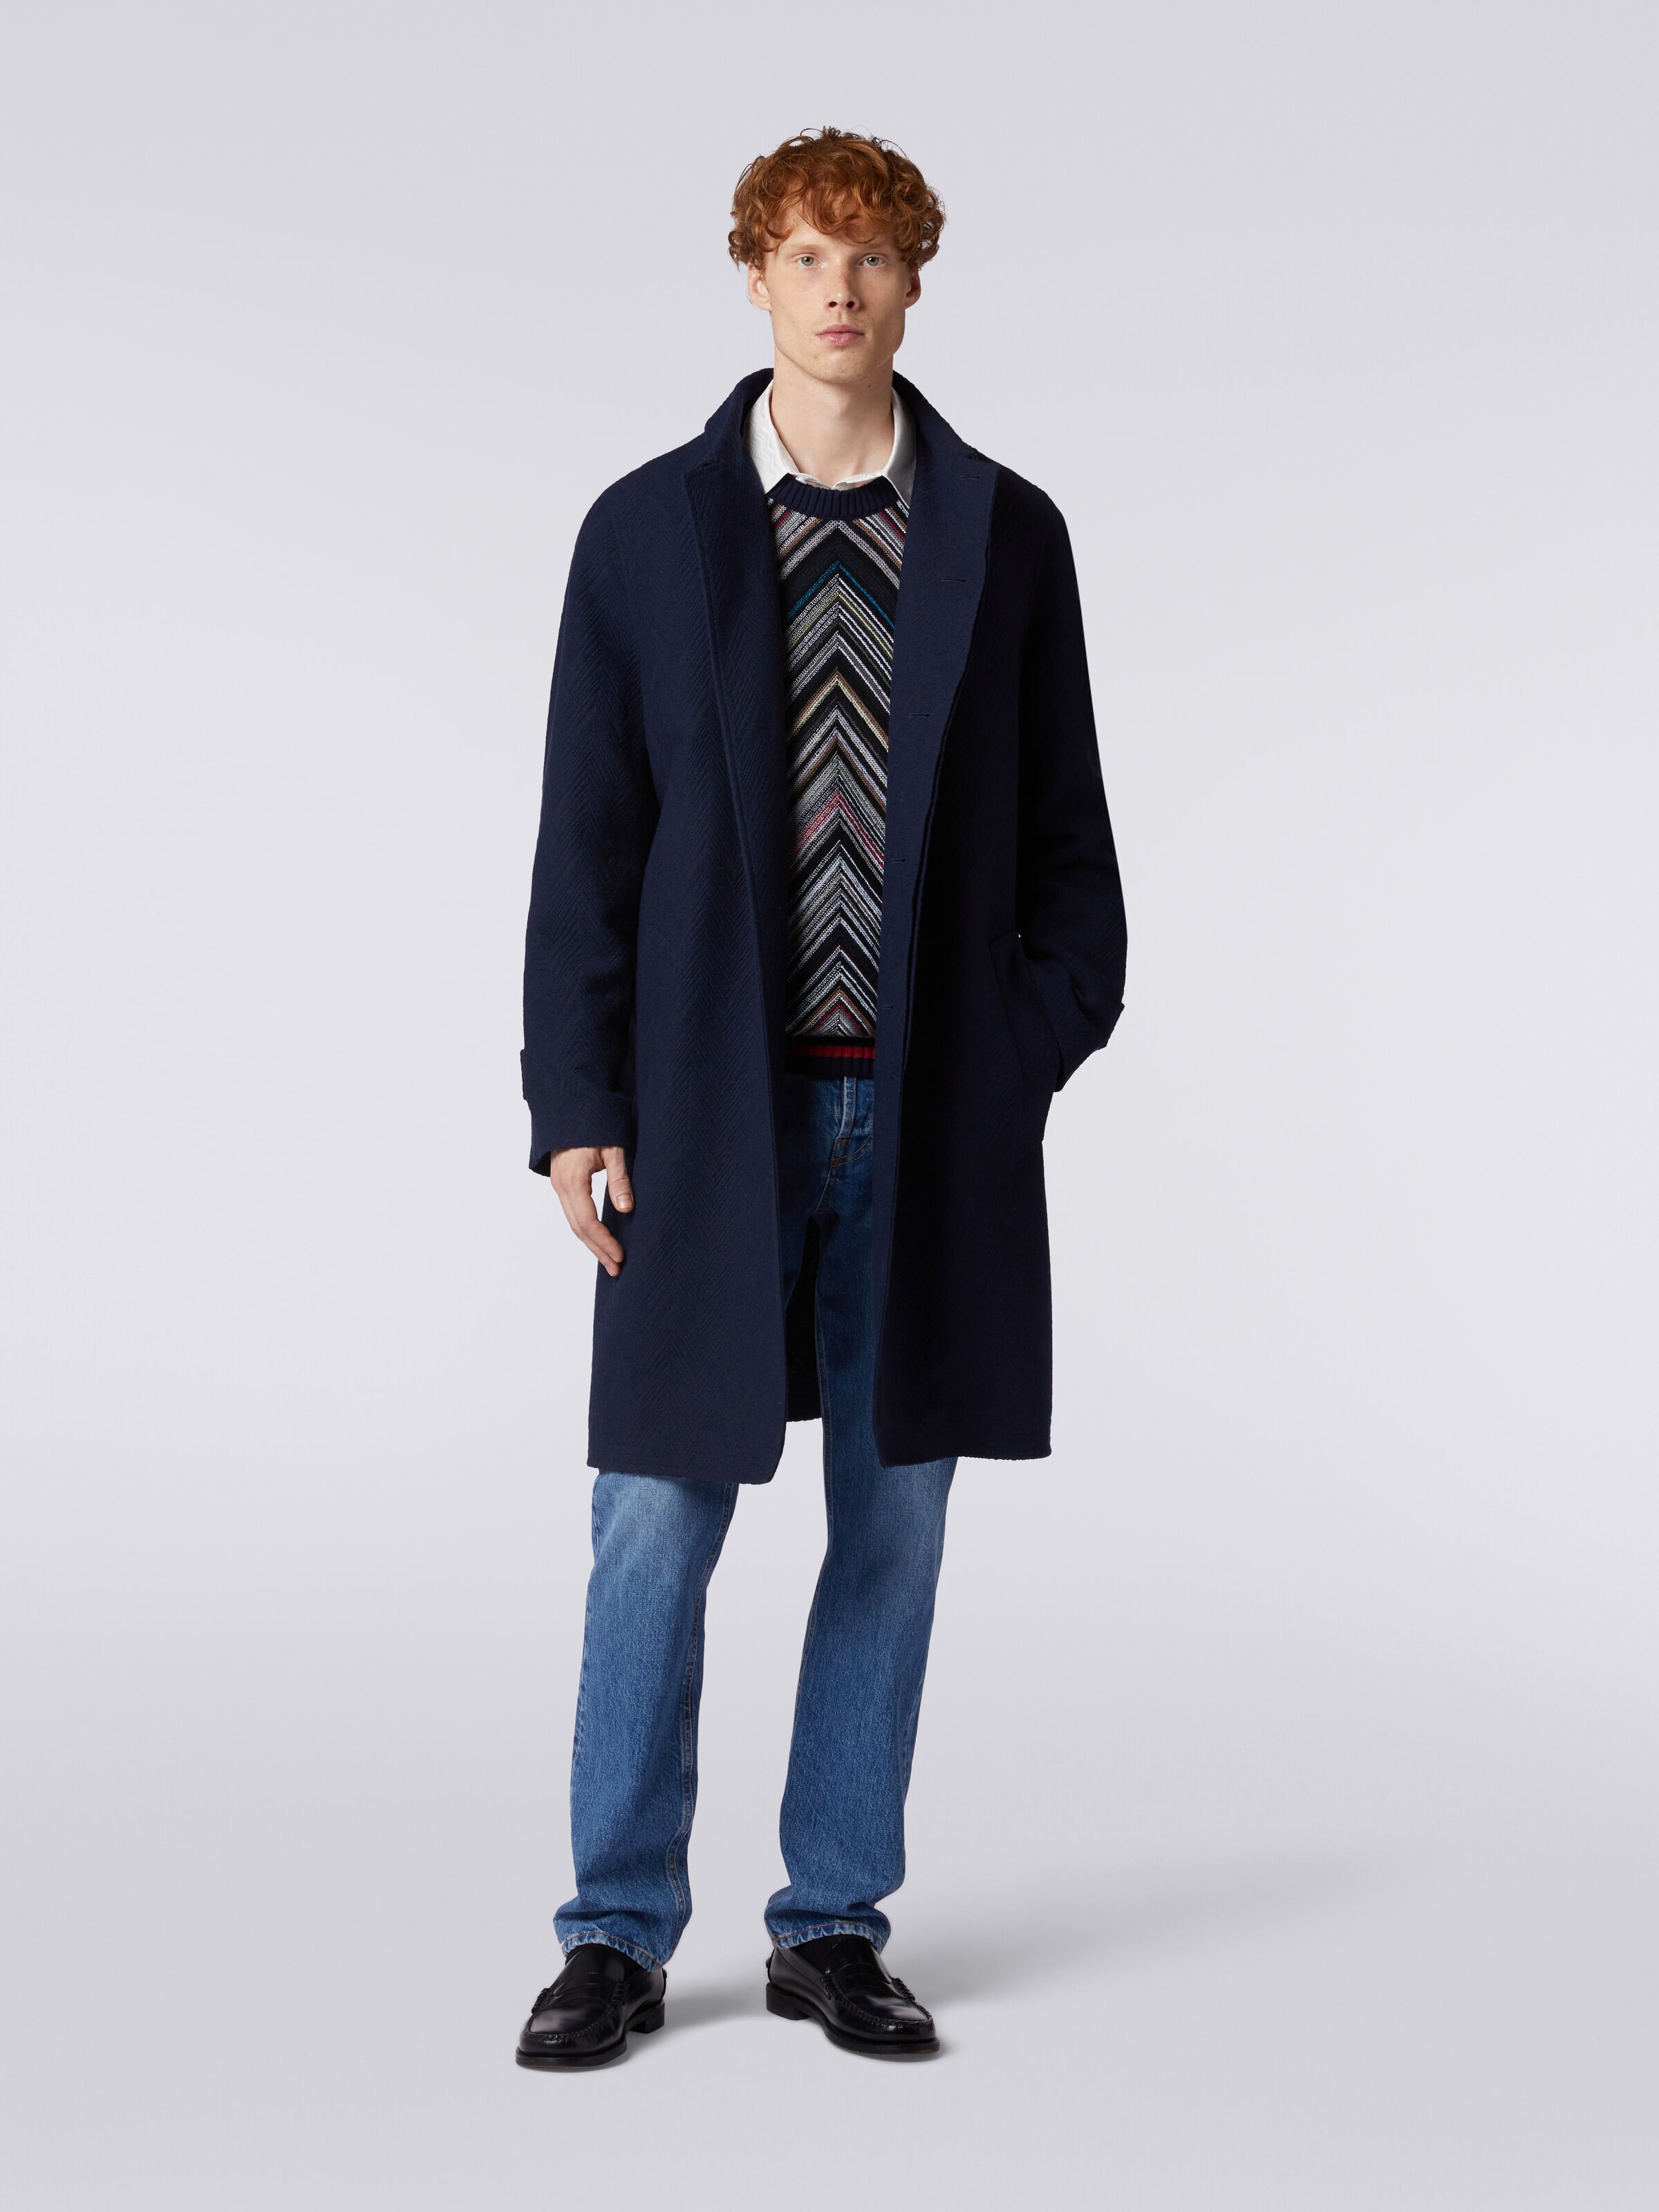 Jacquard wool blend coat with zigzag pattern, Dark Blue - 1